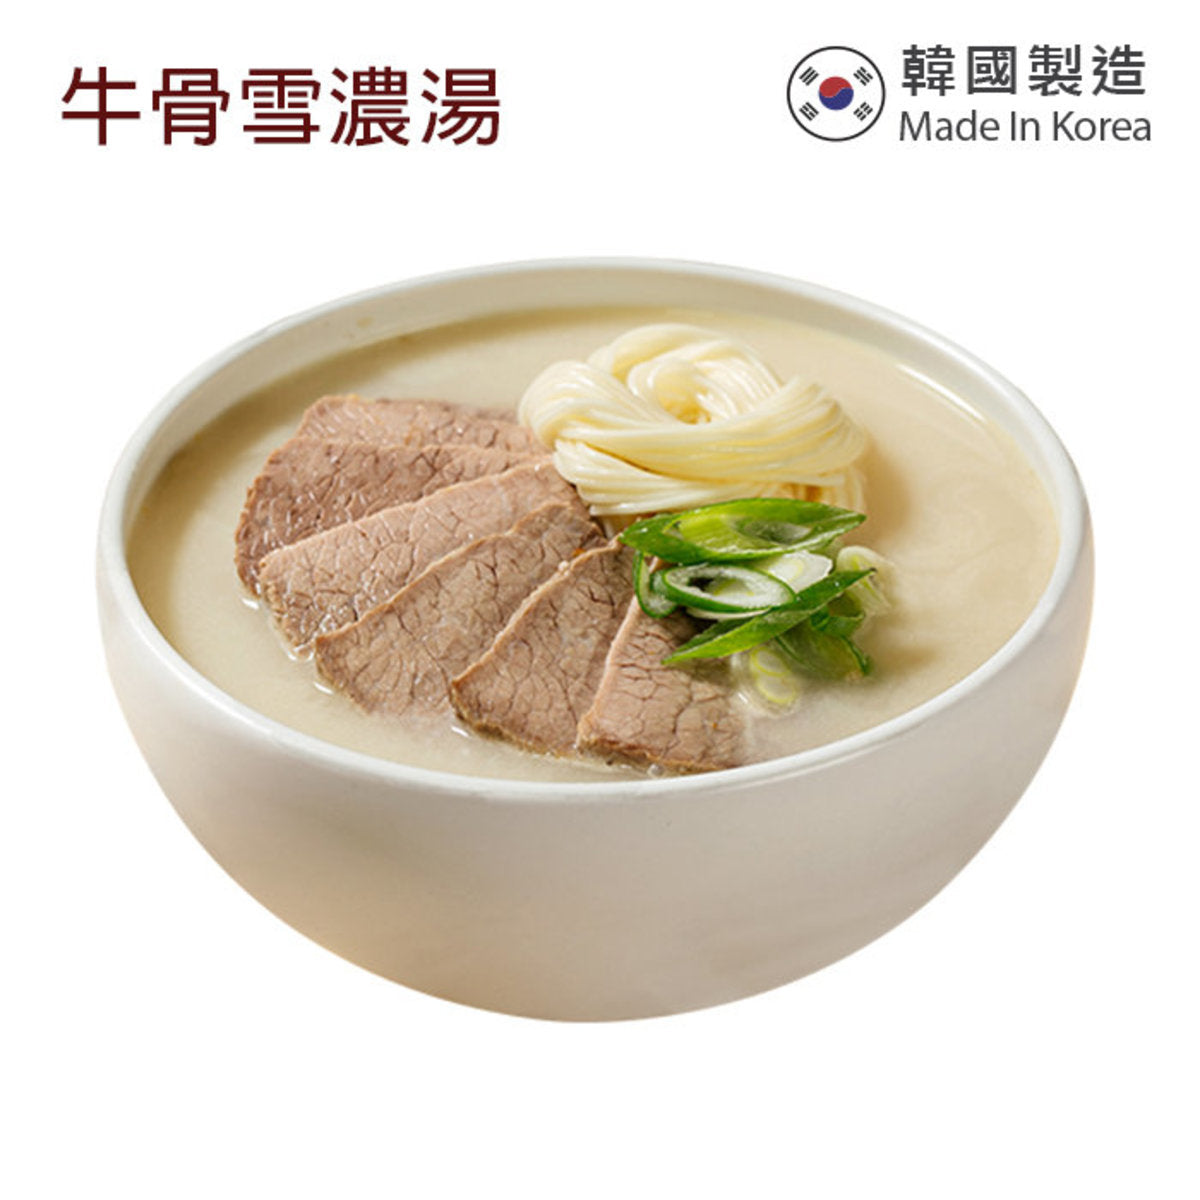 The Loel - 韓國牛骨雪濃湯 Korean Beef Bone Soup 600g (1pc)